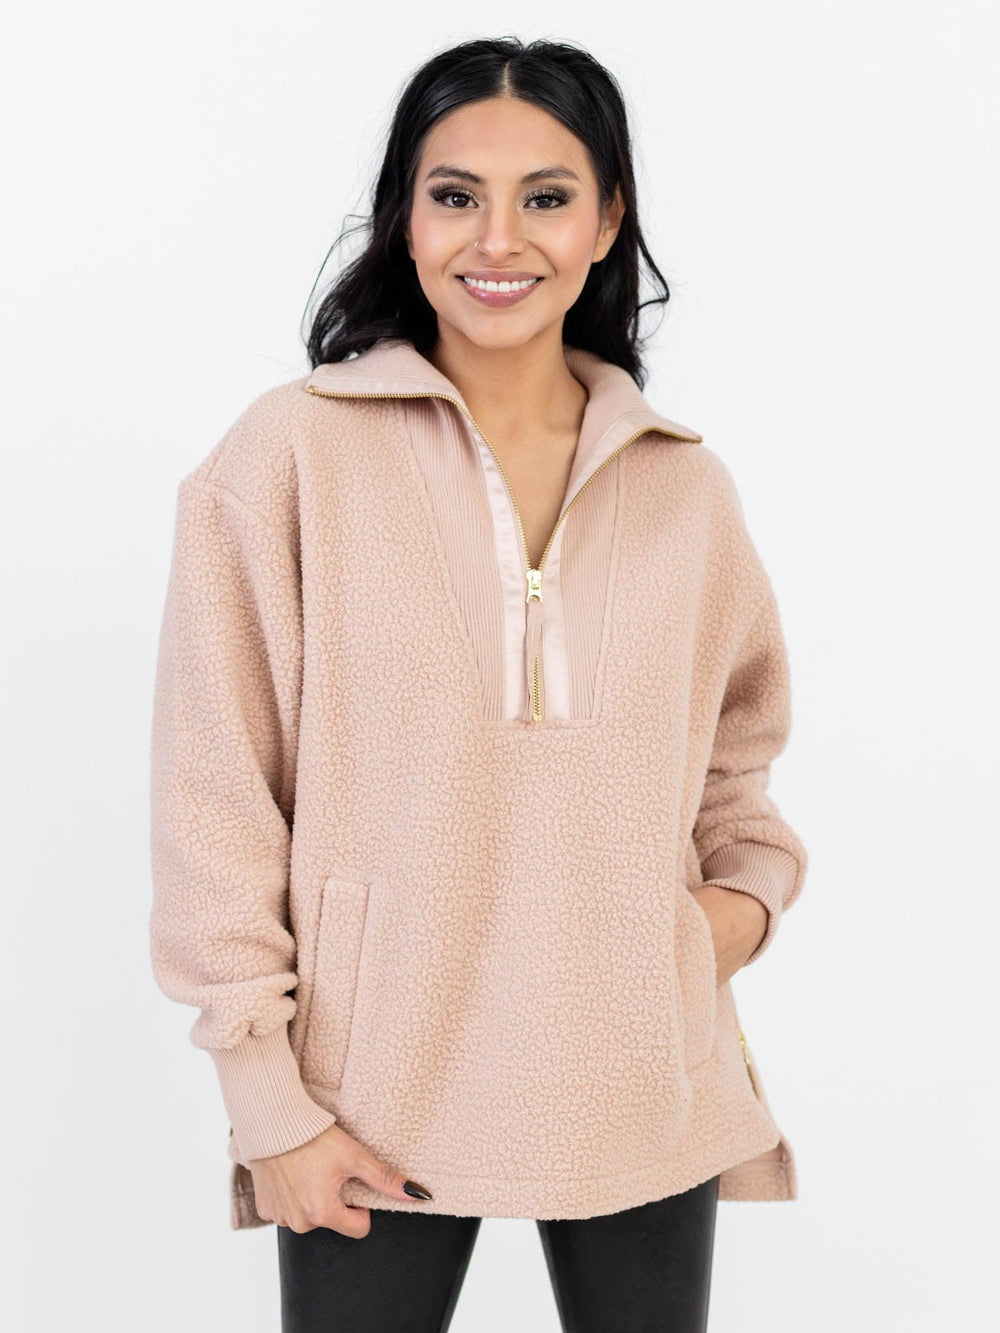 Thread & Supply Full Zip Sherpa Hooded Jacket Women's Size Small Color  Mushroom